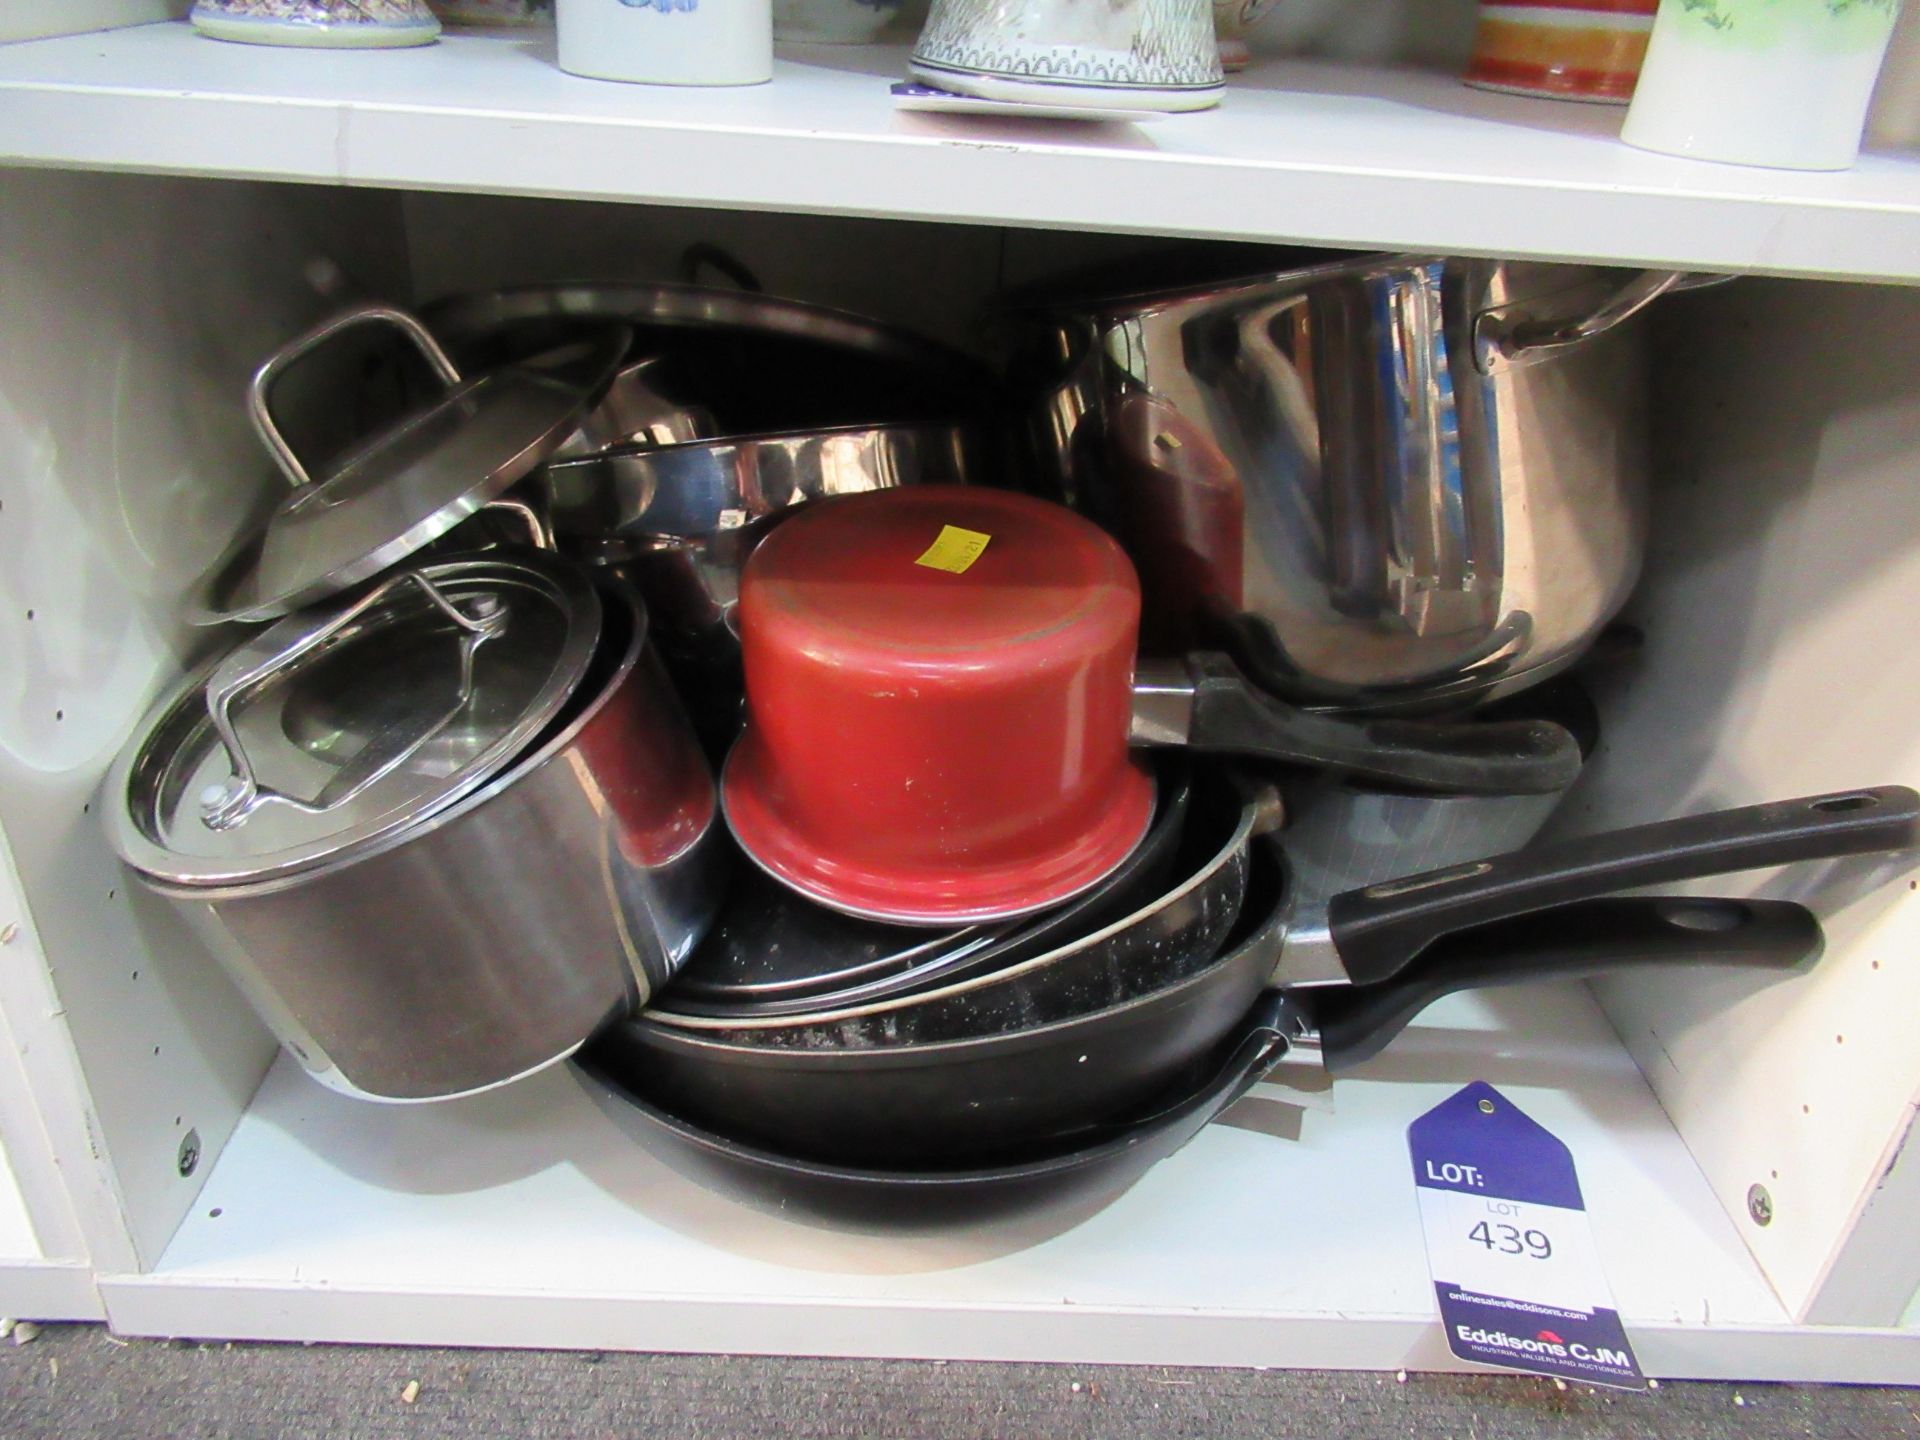 Shelf of Cooking Utensils & Steak Cutlery sets, Chicken egg Holder etc